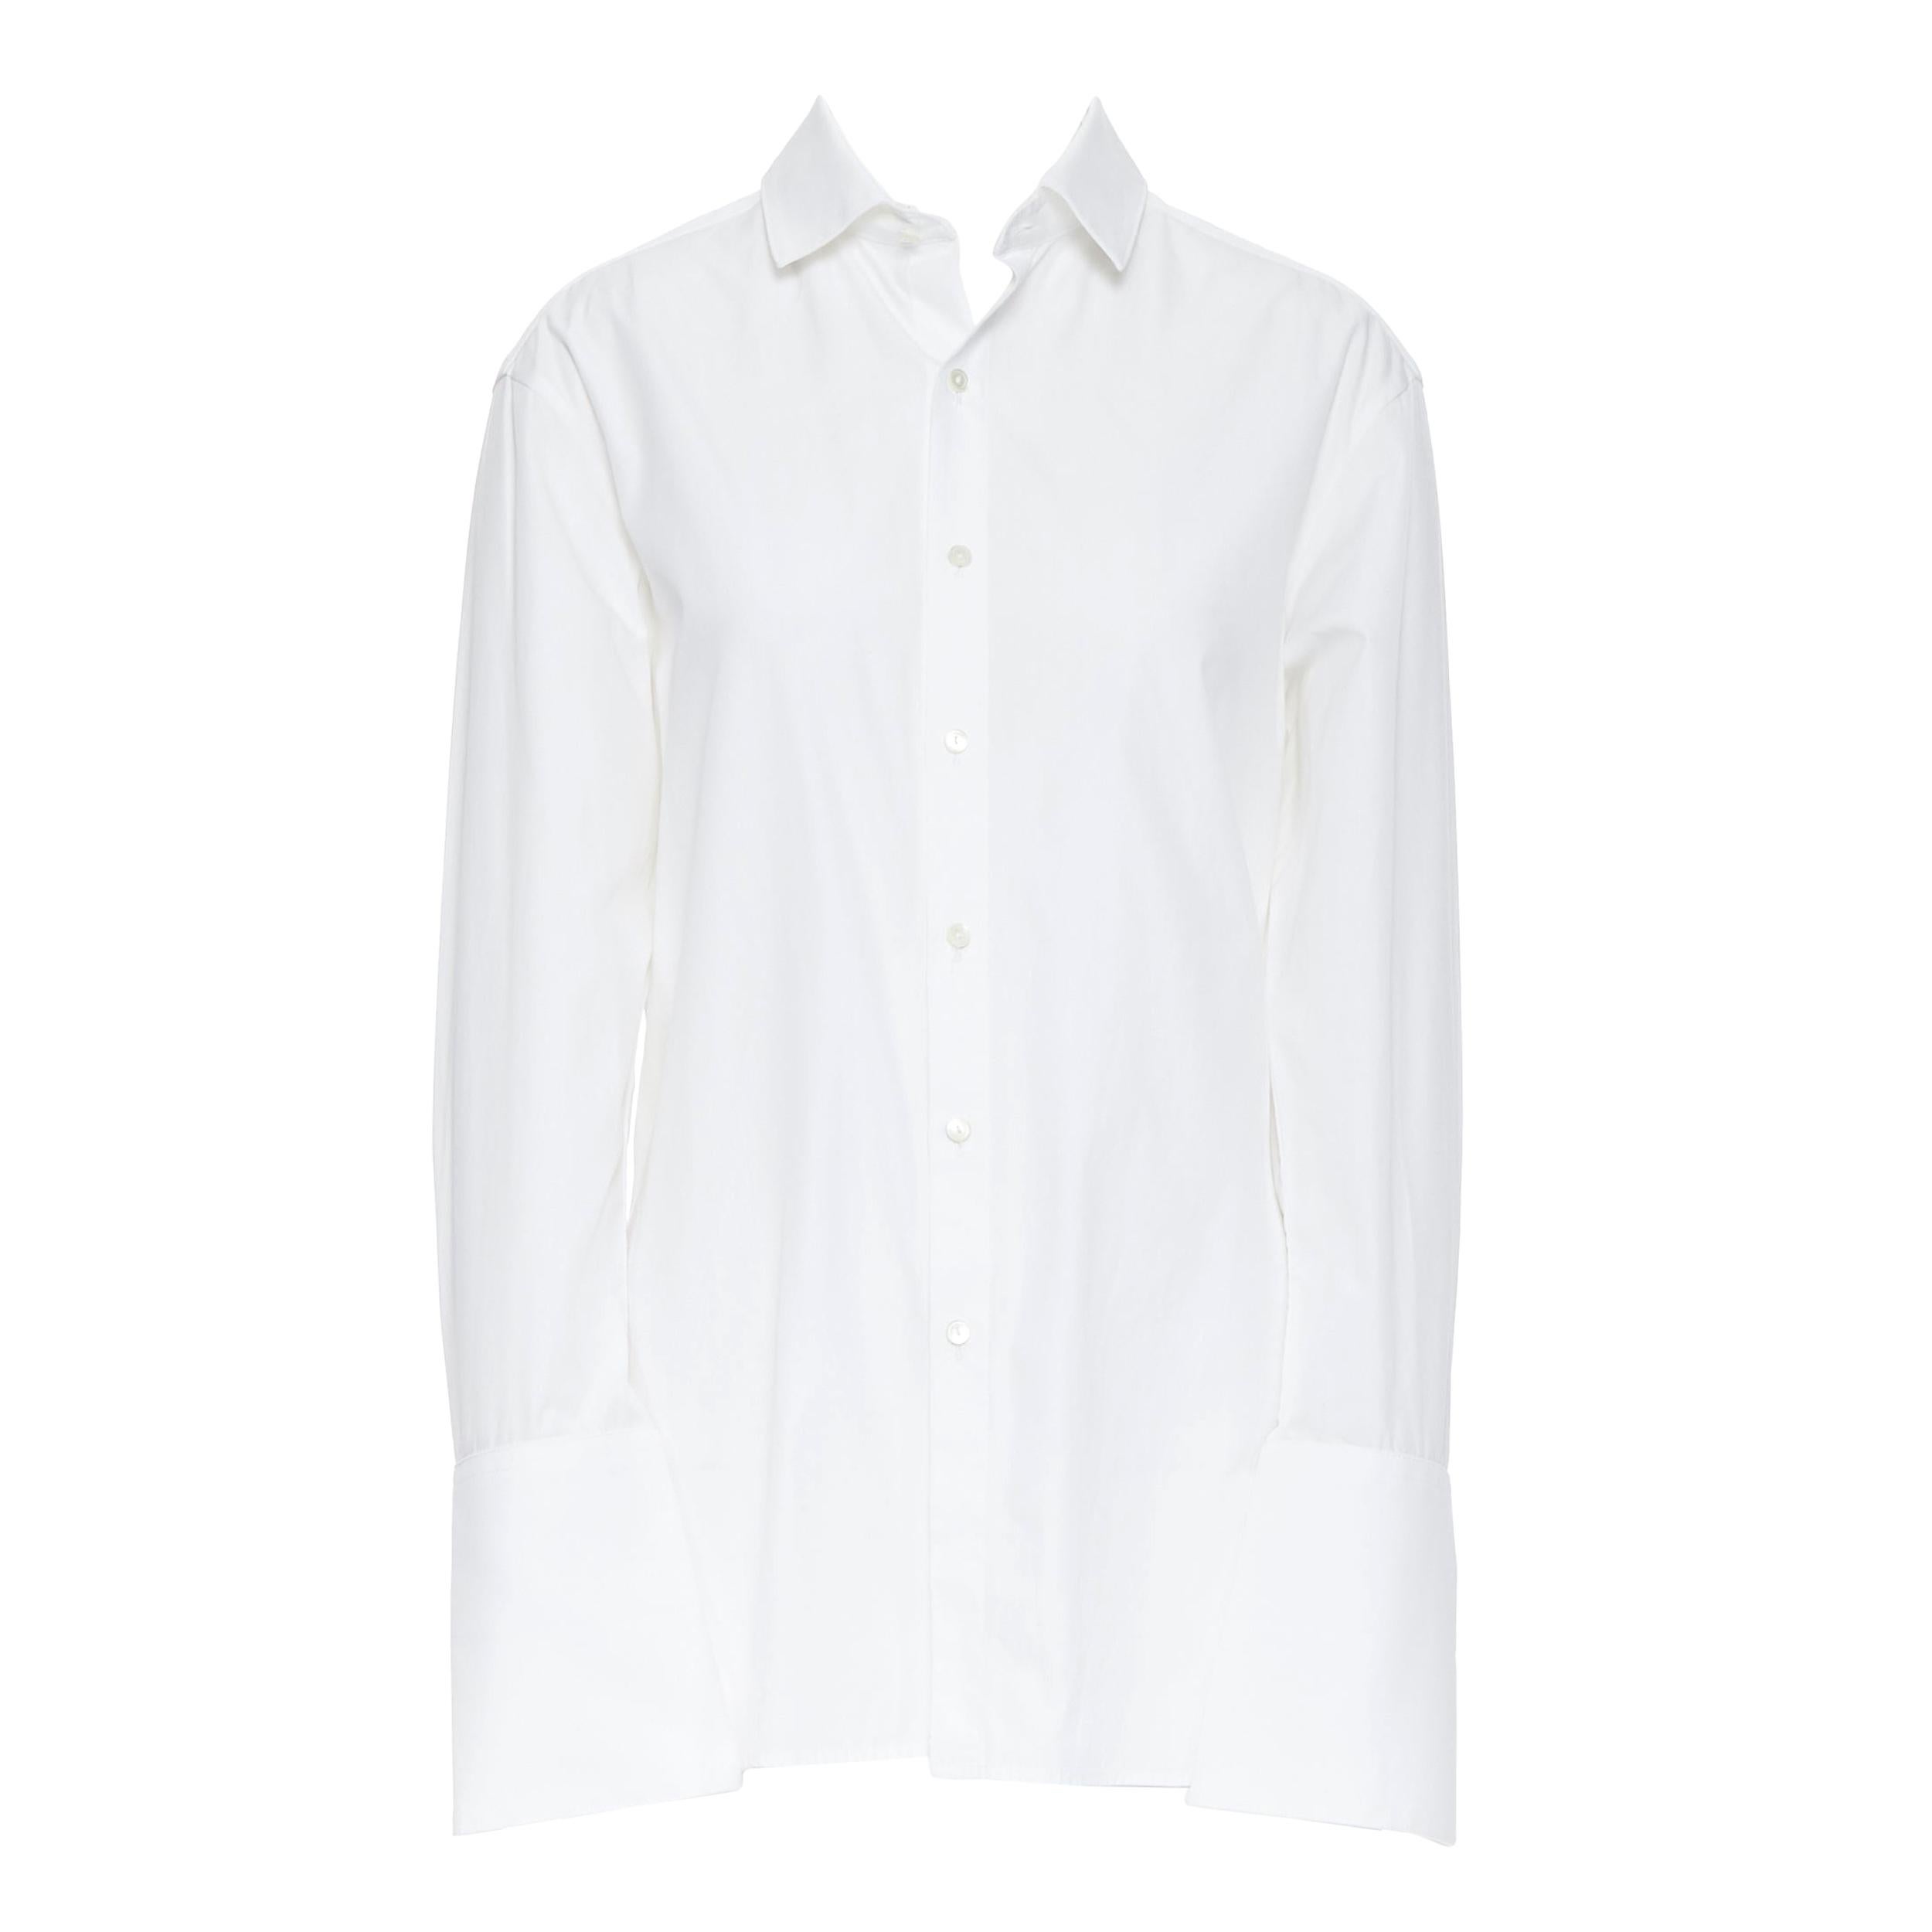 PALMER HARDING white cotton elongated cuff curvec hem oversized shirt UK8